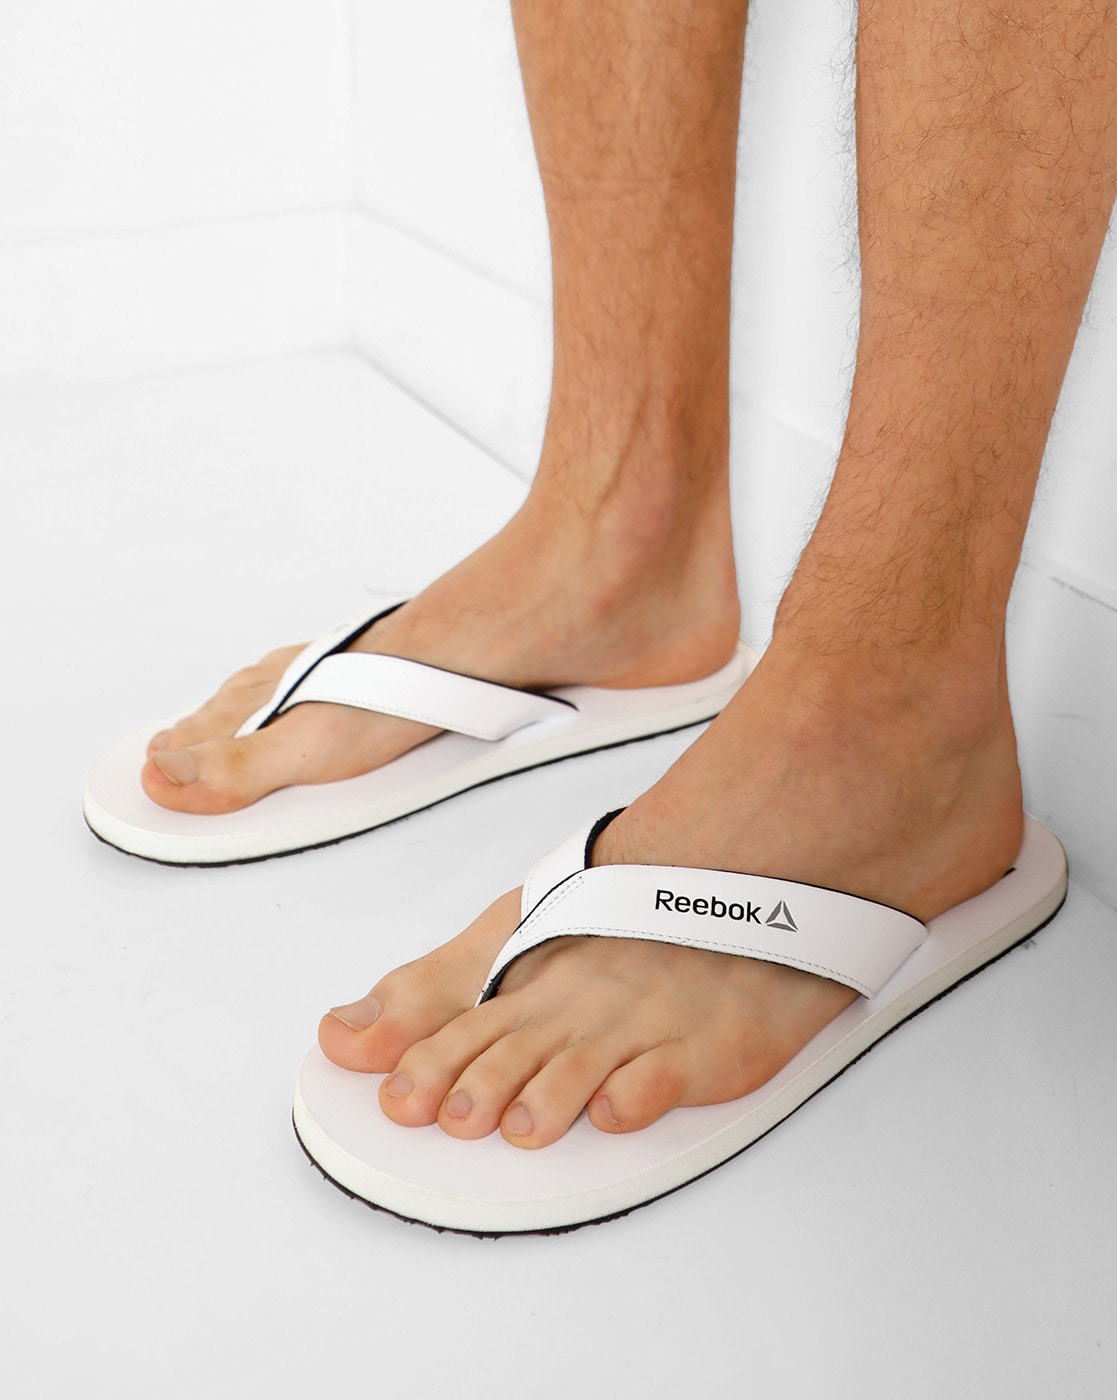 reebok slippers white